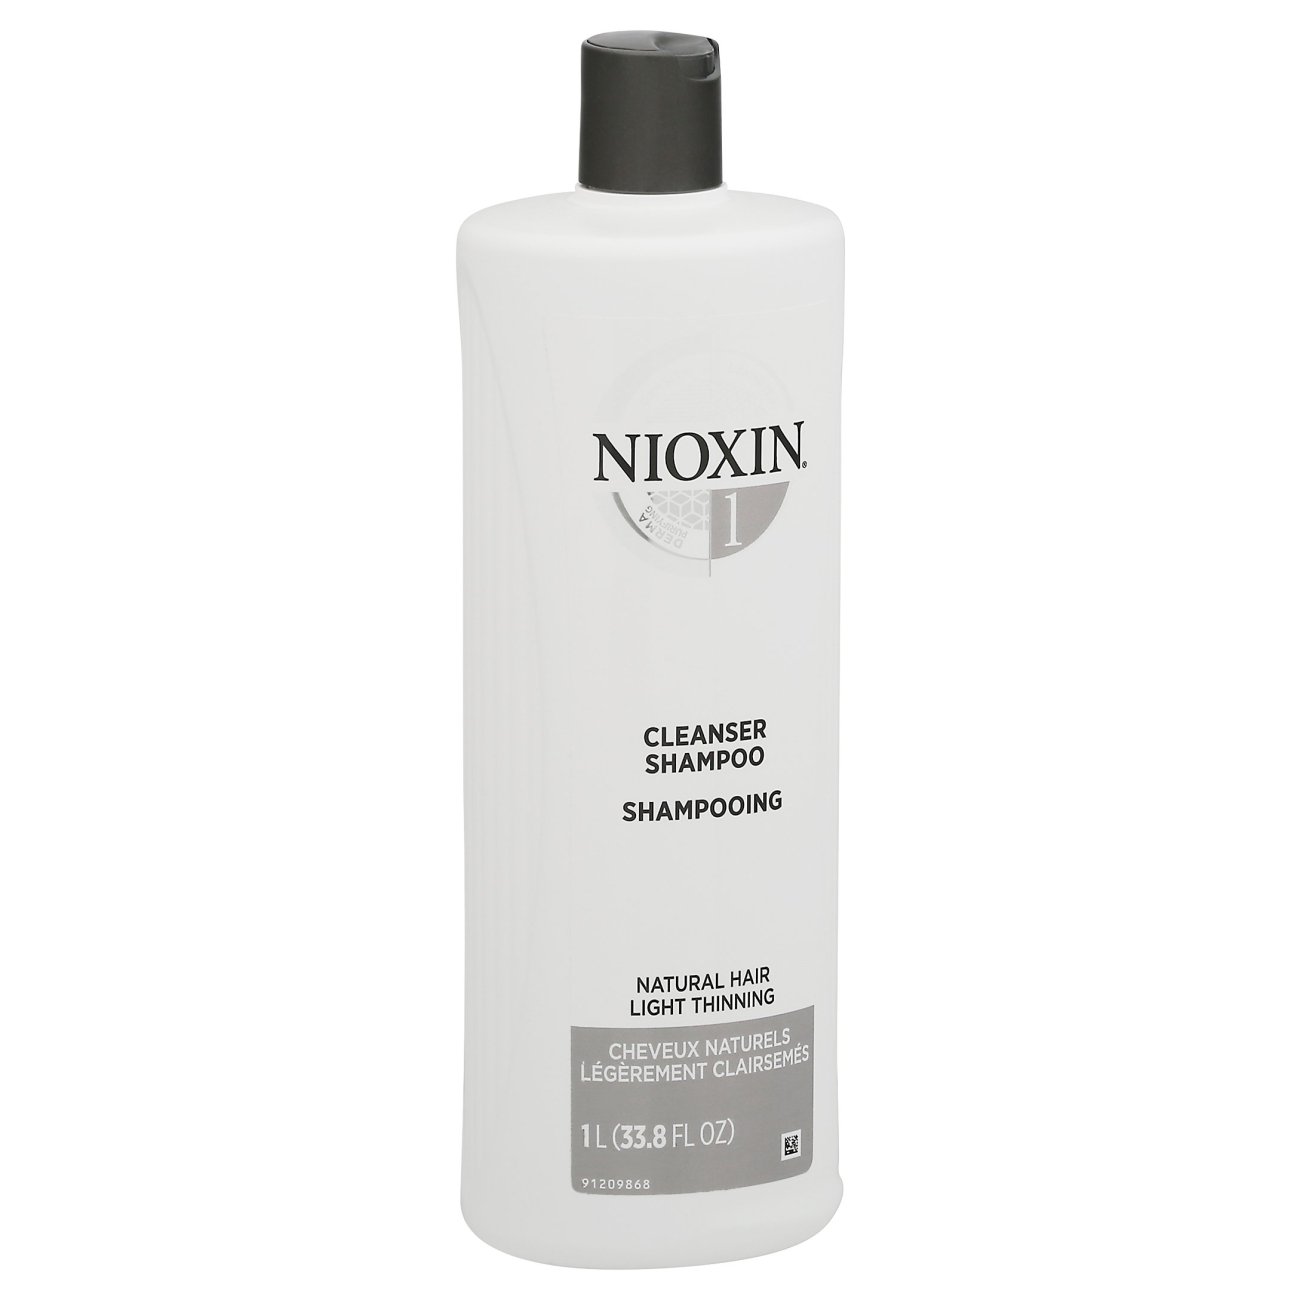 Nioxin 1 Cleanser Normal to Shampoo - Shop Shampoo & Conditioner at H-E-B